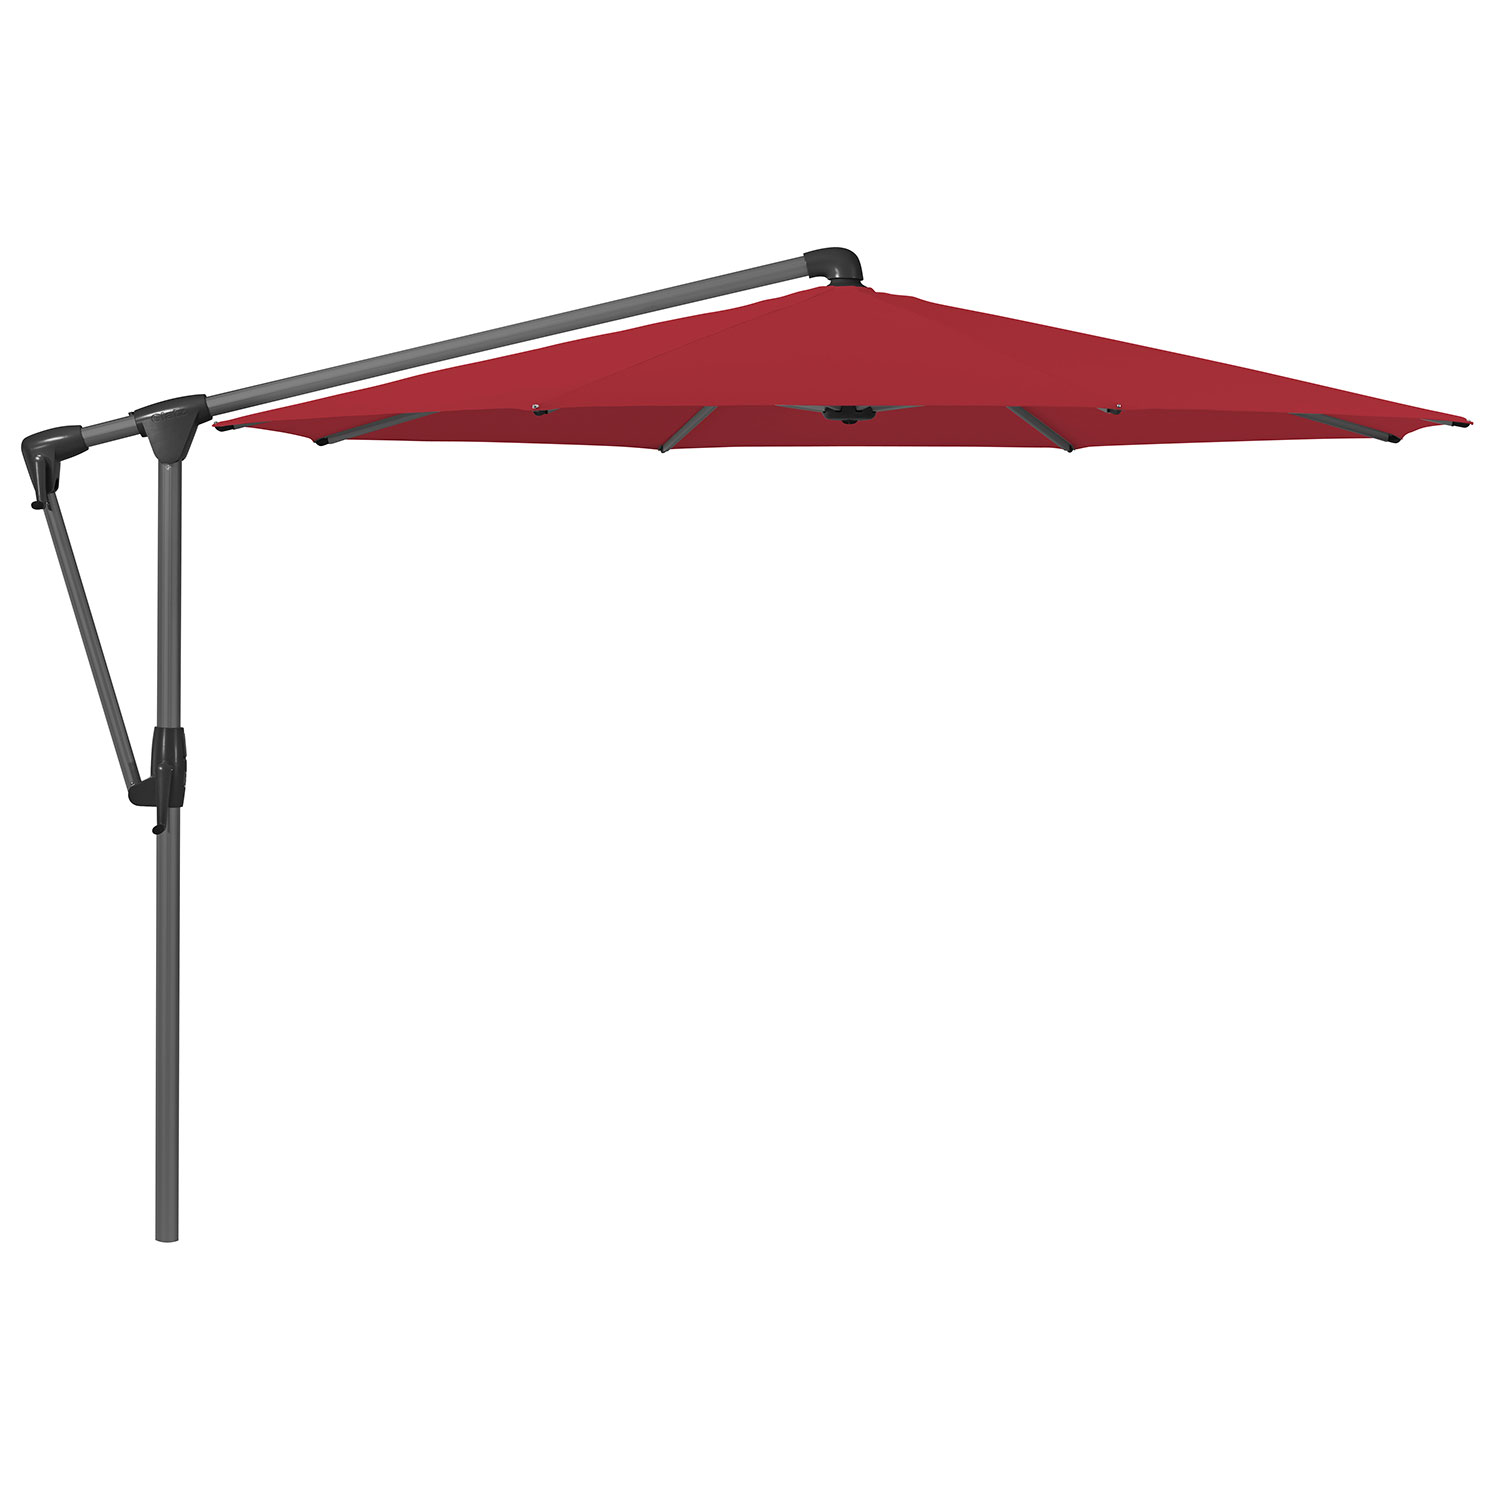 Sunwing Casa frihängande parasoll 330 cm kat.5 antracite alu / 646 rubino